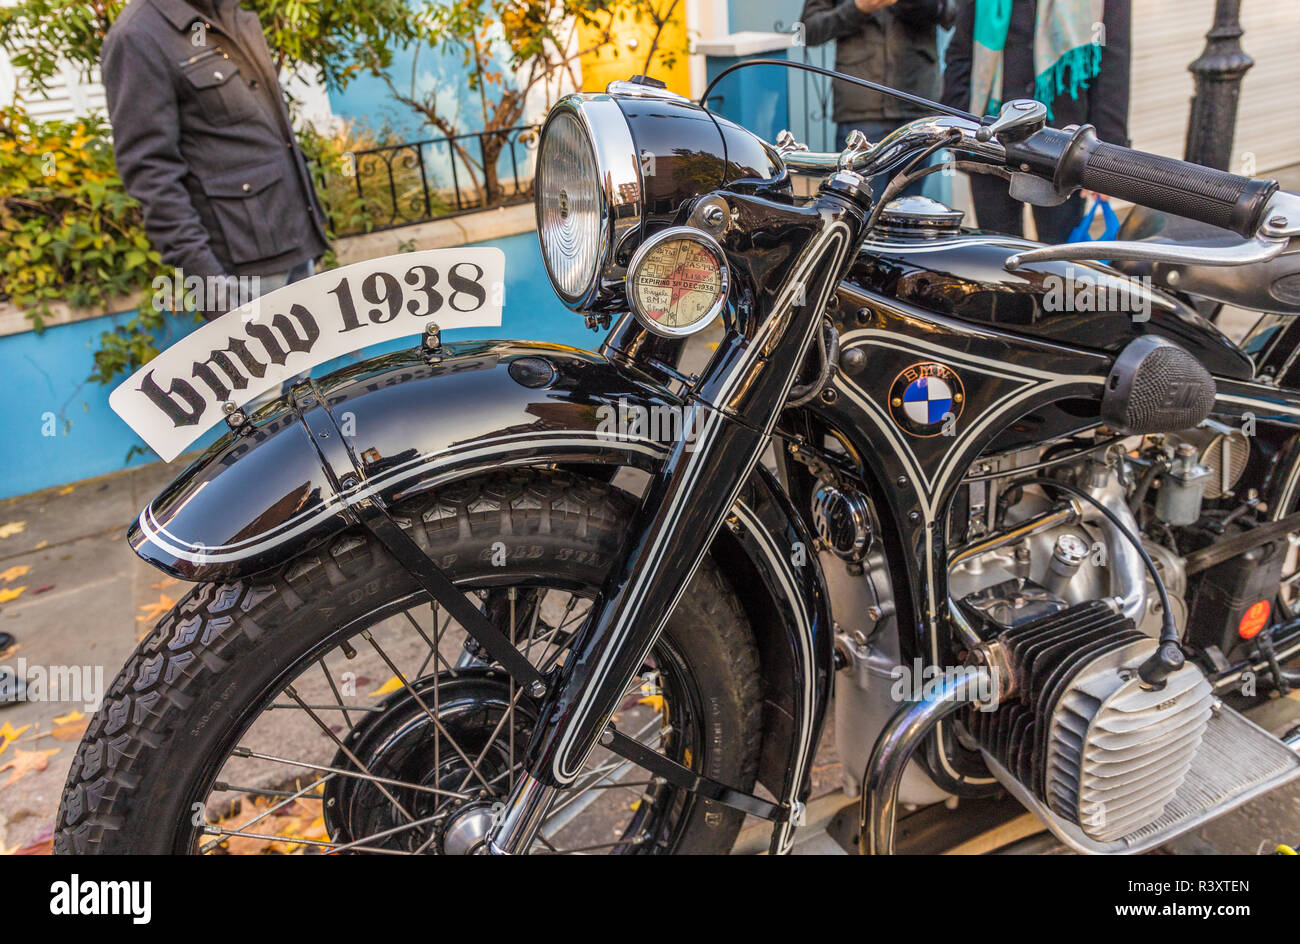 A beautiful old BMW motorbike Stock Photo